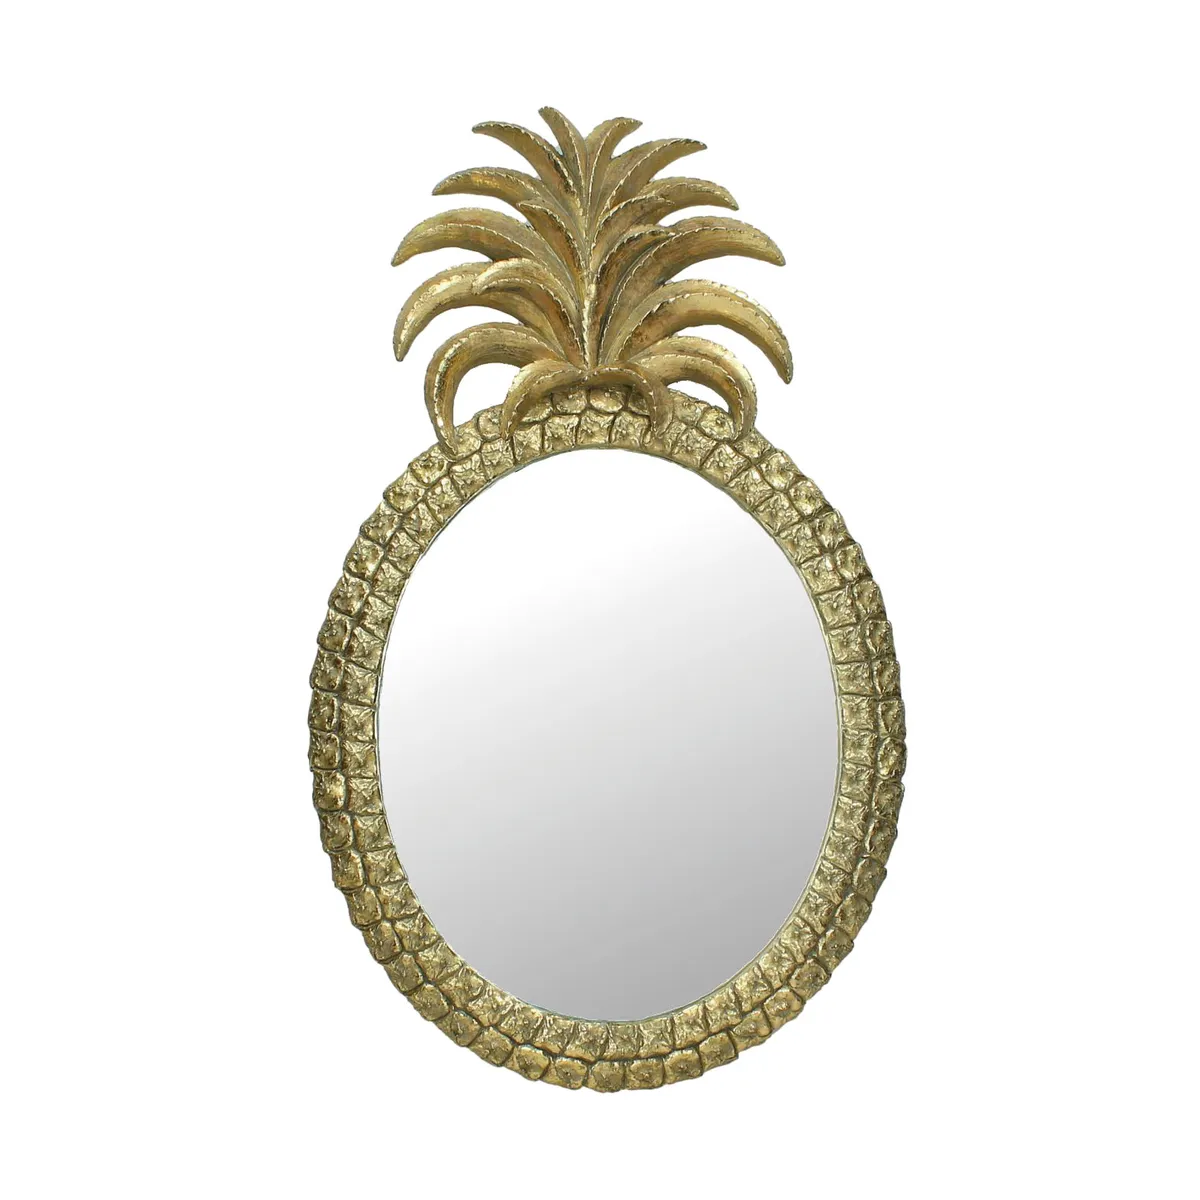 Perfect pineapple mirror, £49, Audenza